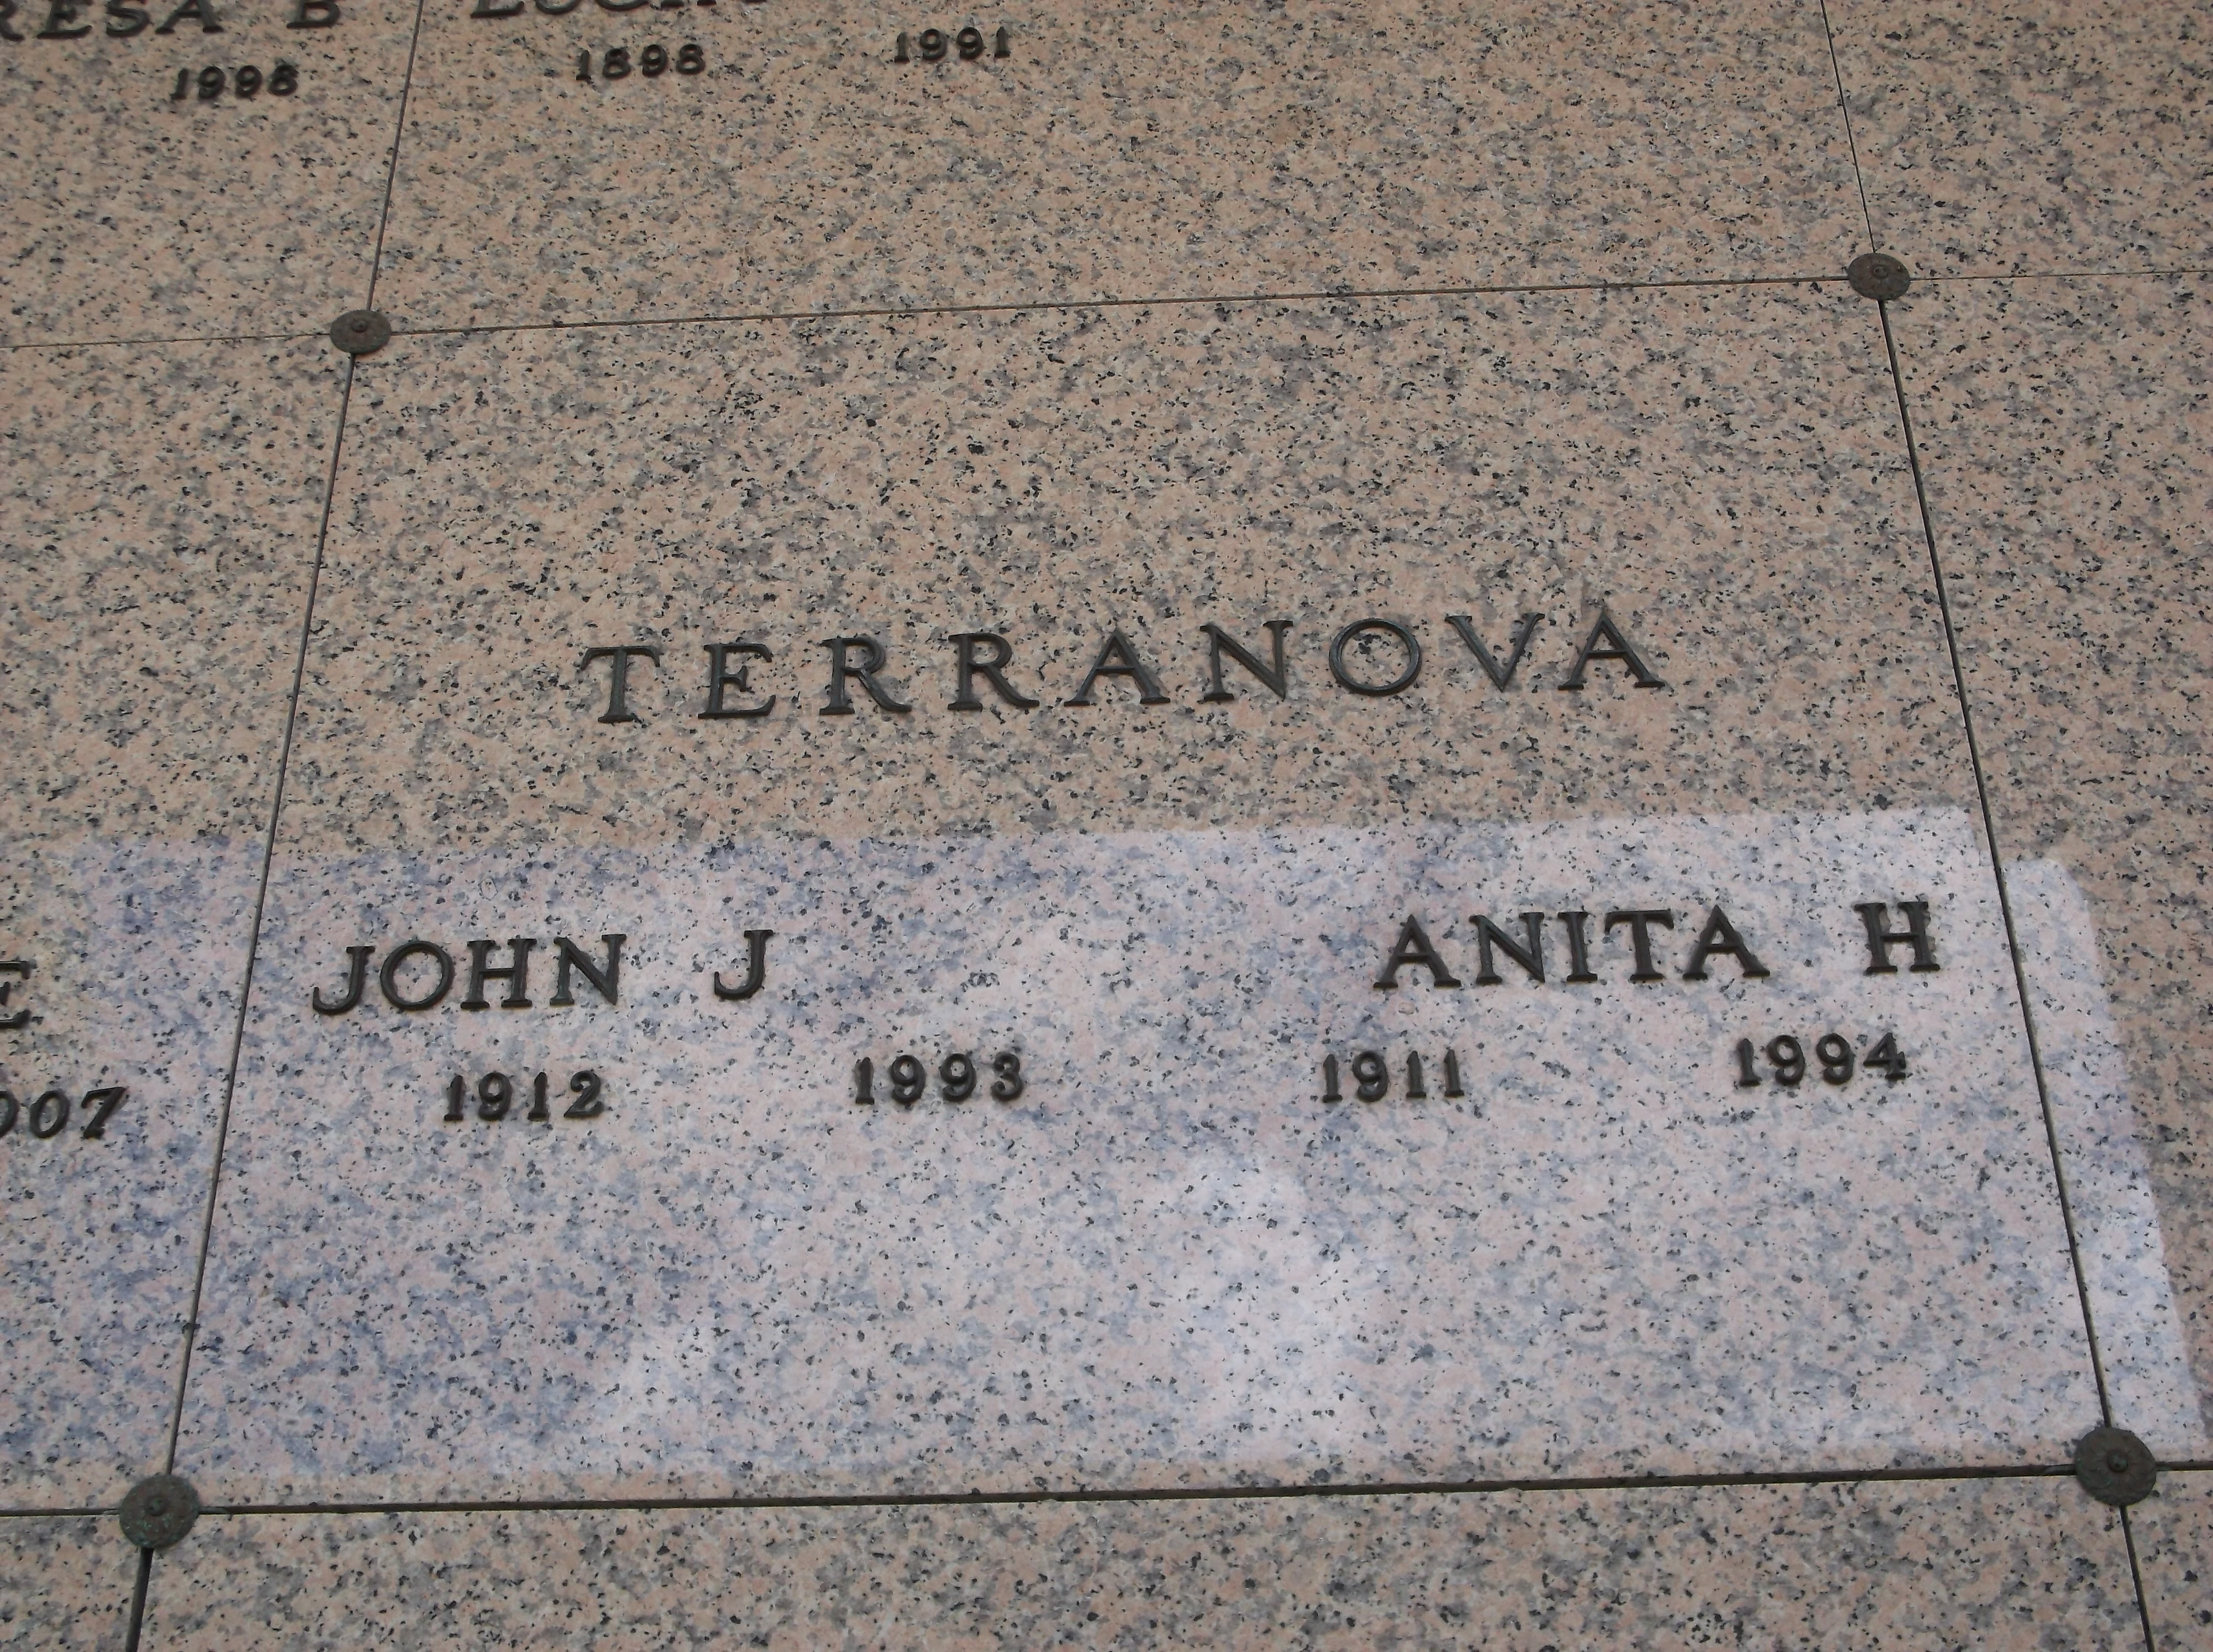 John J Terranova